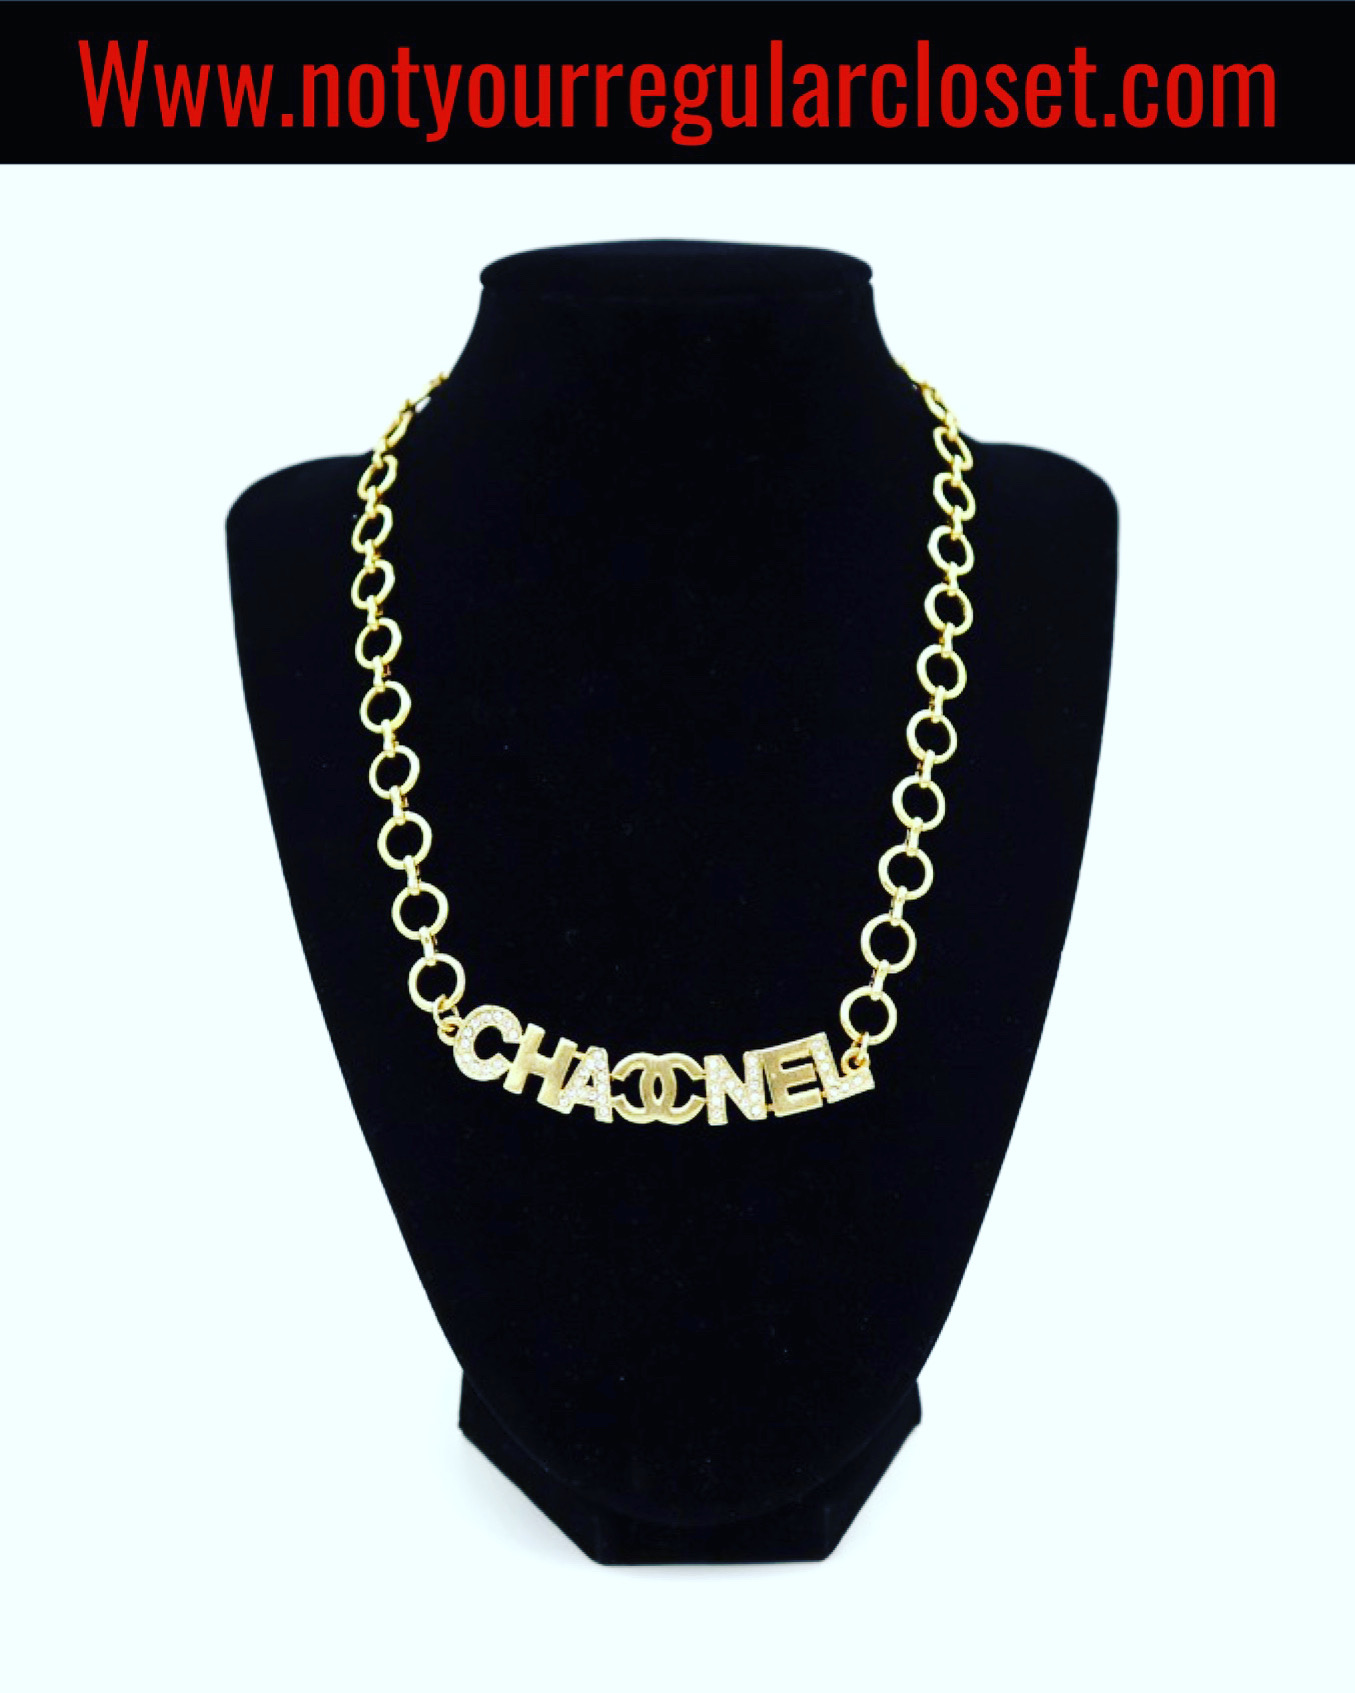 Beautiful Custom Chanel Necklace - Not Your Regular Closet